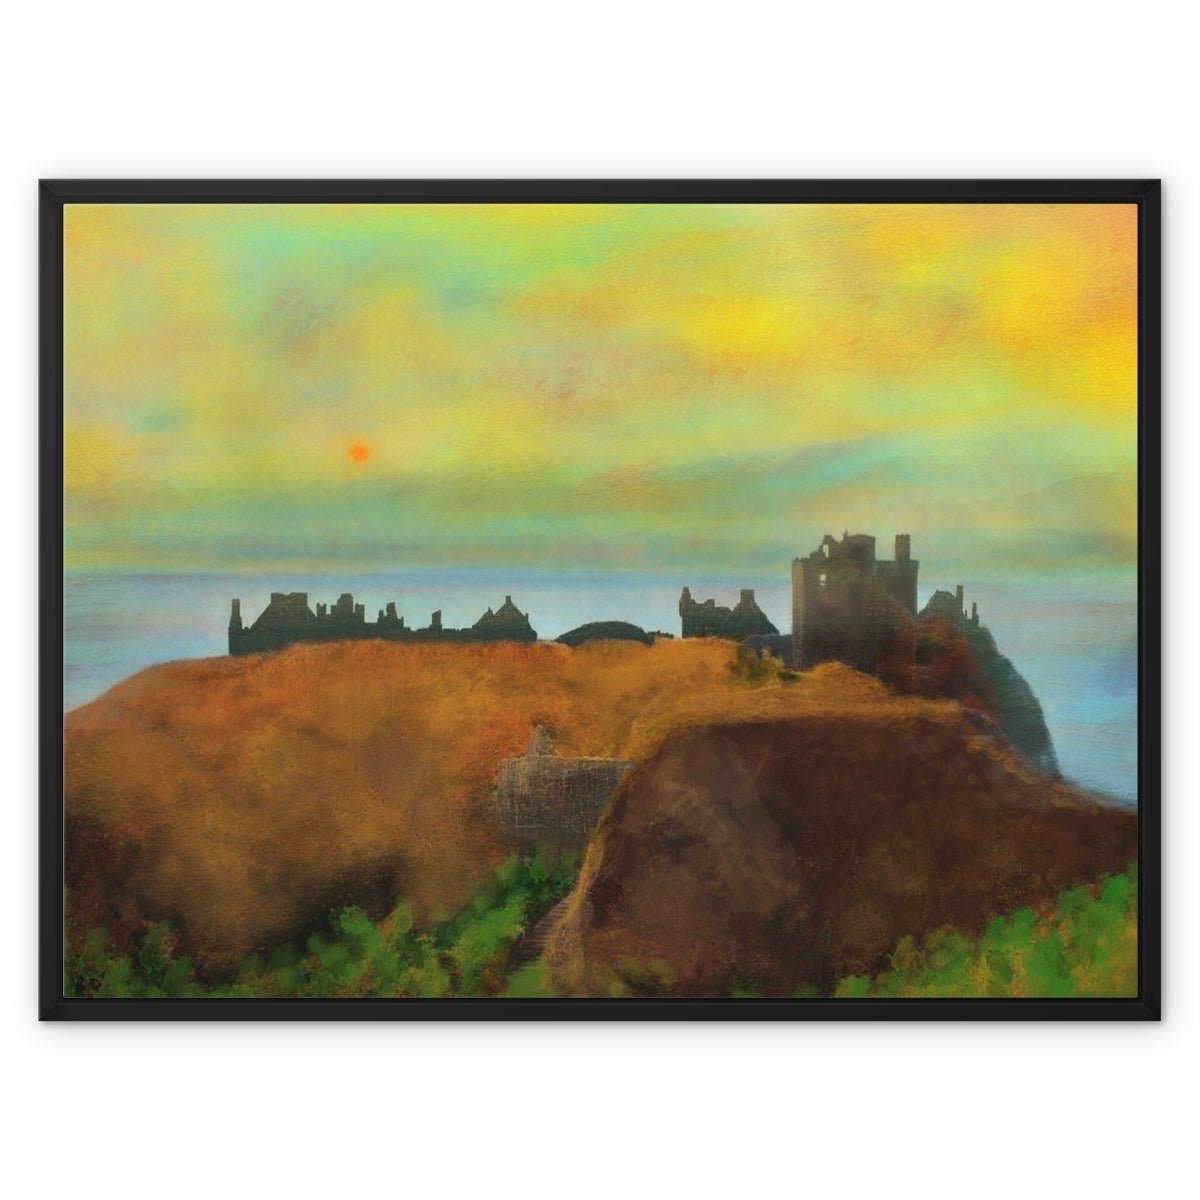 Dunnottar Castle Dusk Painting | Framed Canvas From Scotland-Floating Framed Canvas Prints-Scottish Castles Art Gallery-32"x24"-Black Frame-Paintings, Prints, Homeware, Art Gifts From Scotland By Scottish Artist Kevin Hunter